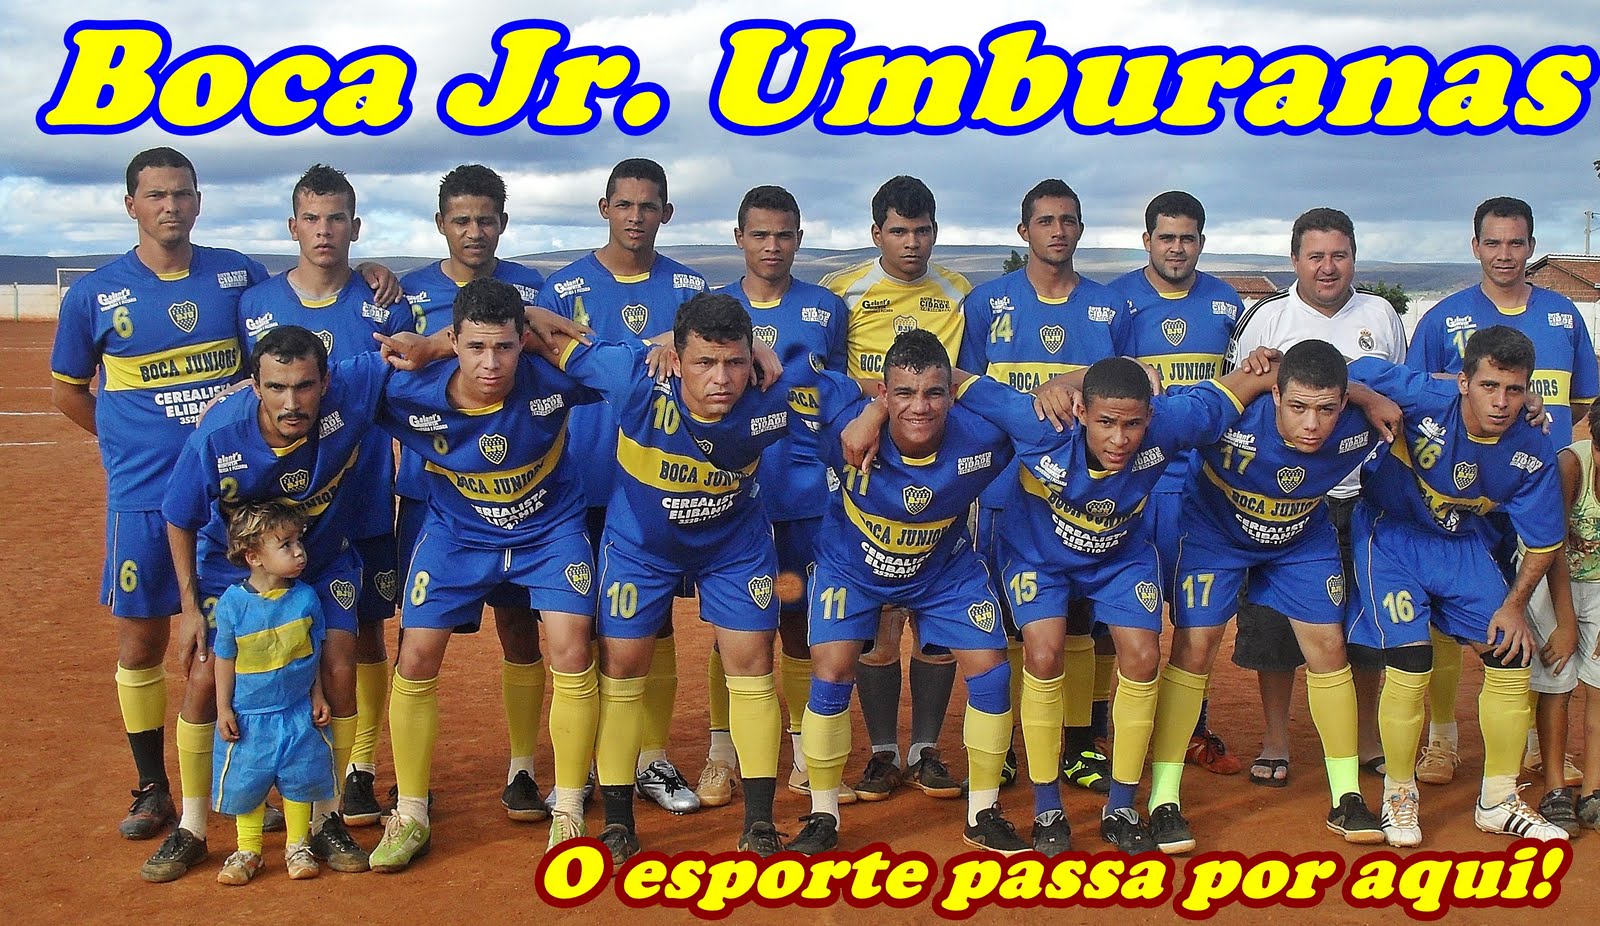 Blog Oficial Boca Jr. de Umburanas